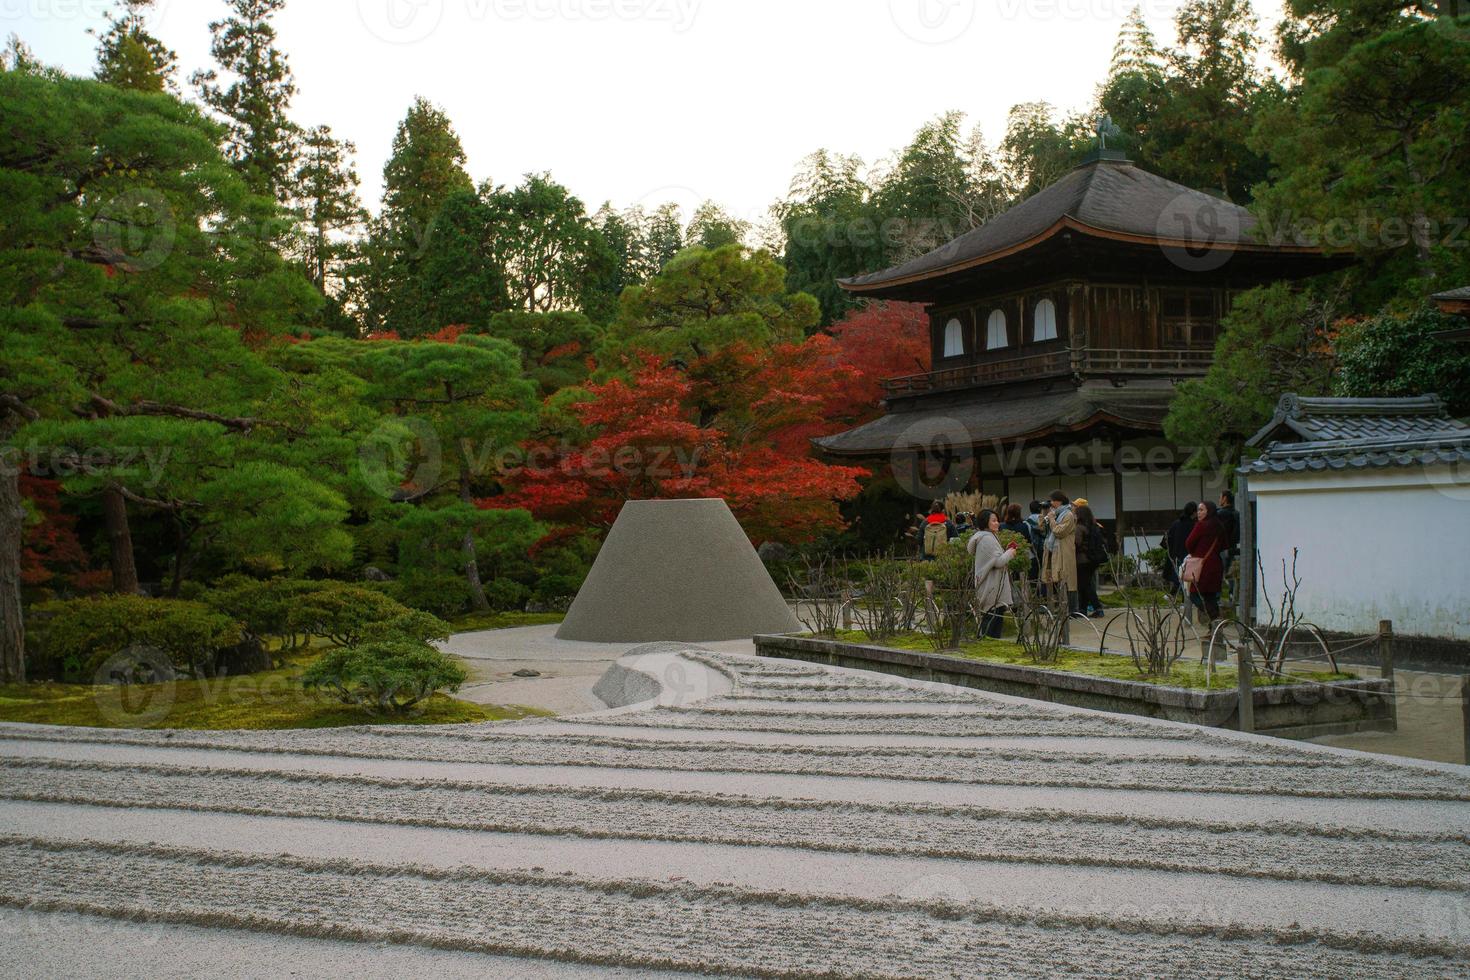 ginshaden sabbia giardino, zen giardino o giapponese roccia giardino, nel ginkaku-ji, o tempio di il argento padiglione ufficialmente di nome jisho-ji, o tempio di splendente misericordia, kyoto, kansai, Giappone foto